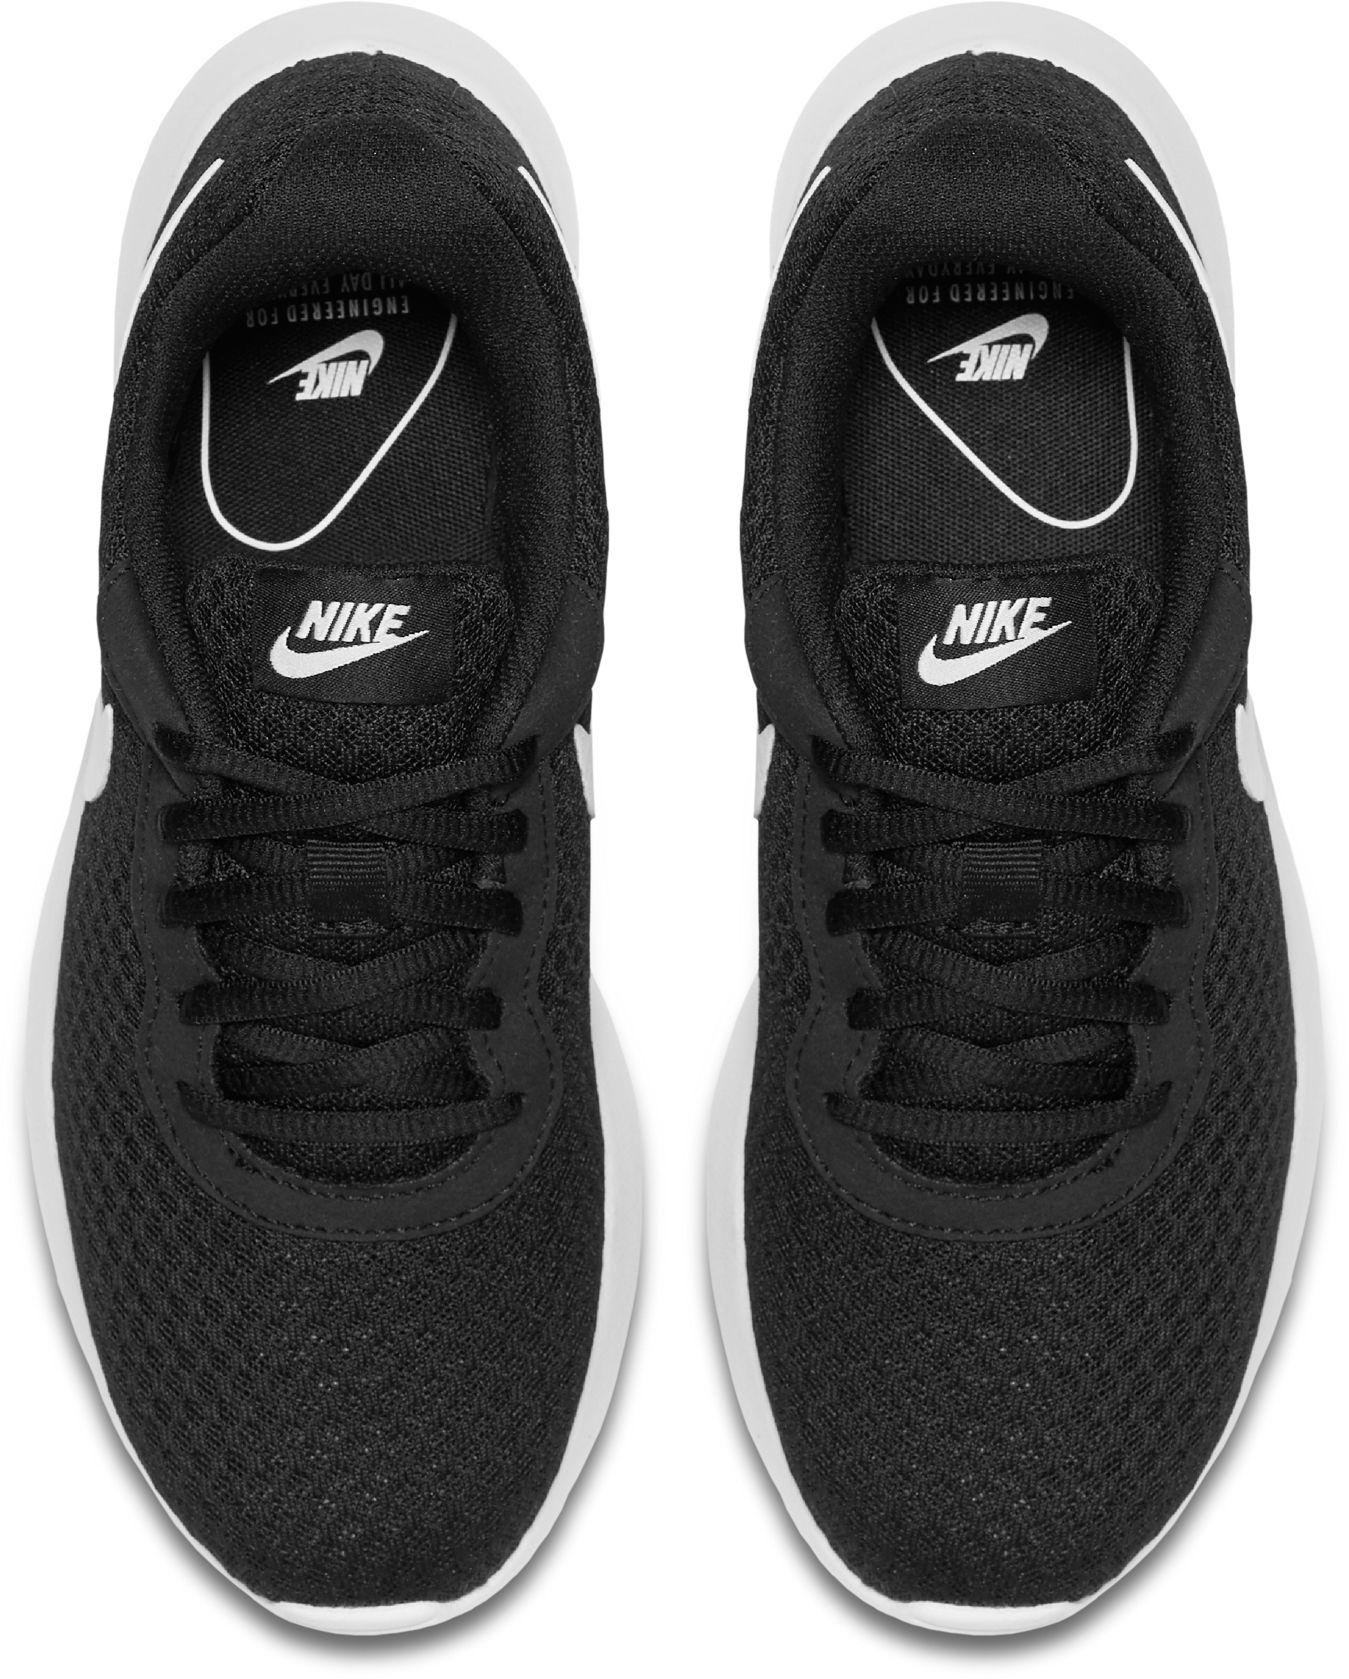 Nike Tanjun Shoes in Black/White (Black) - Lyst